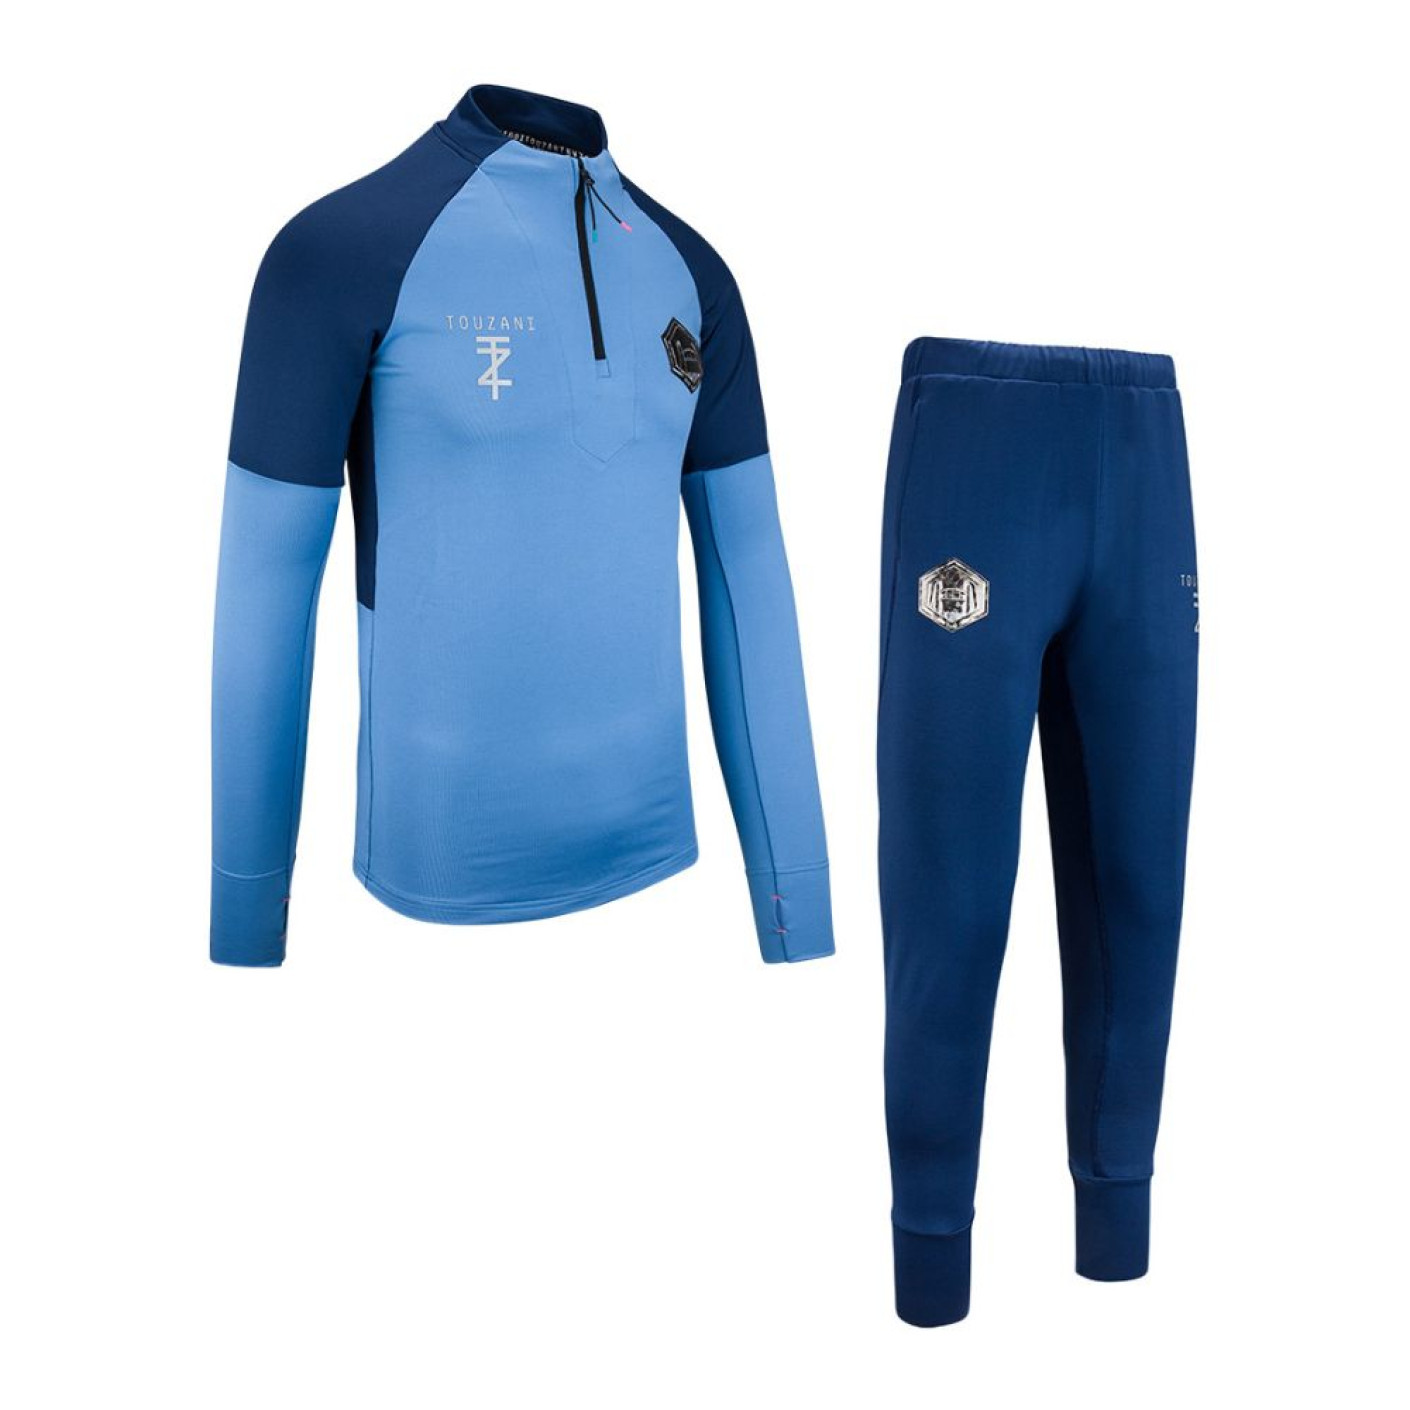 Performance suit - Blue/Navy - 100%